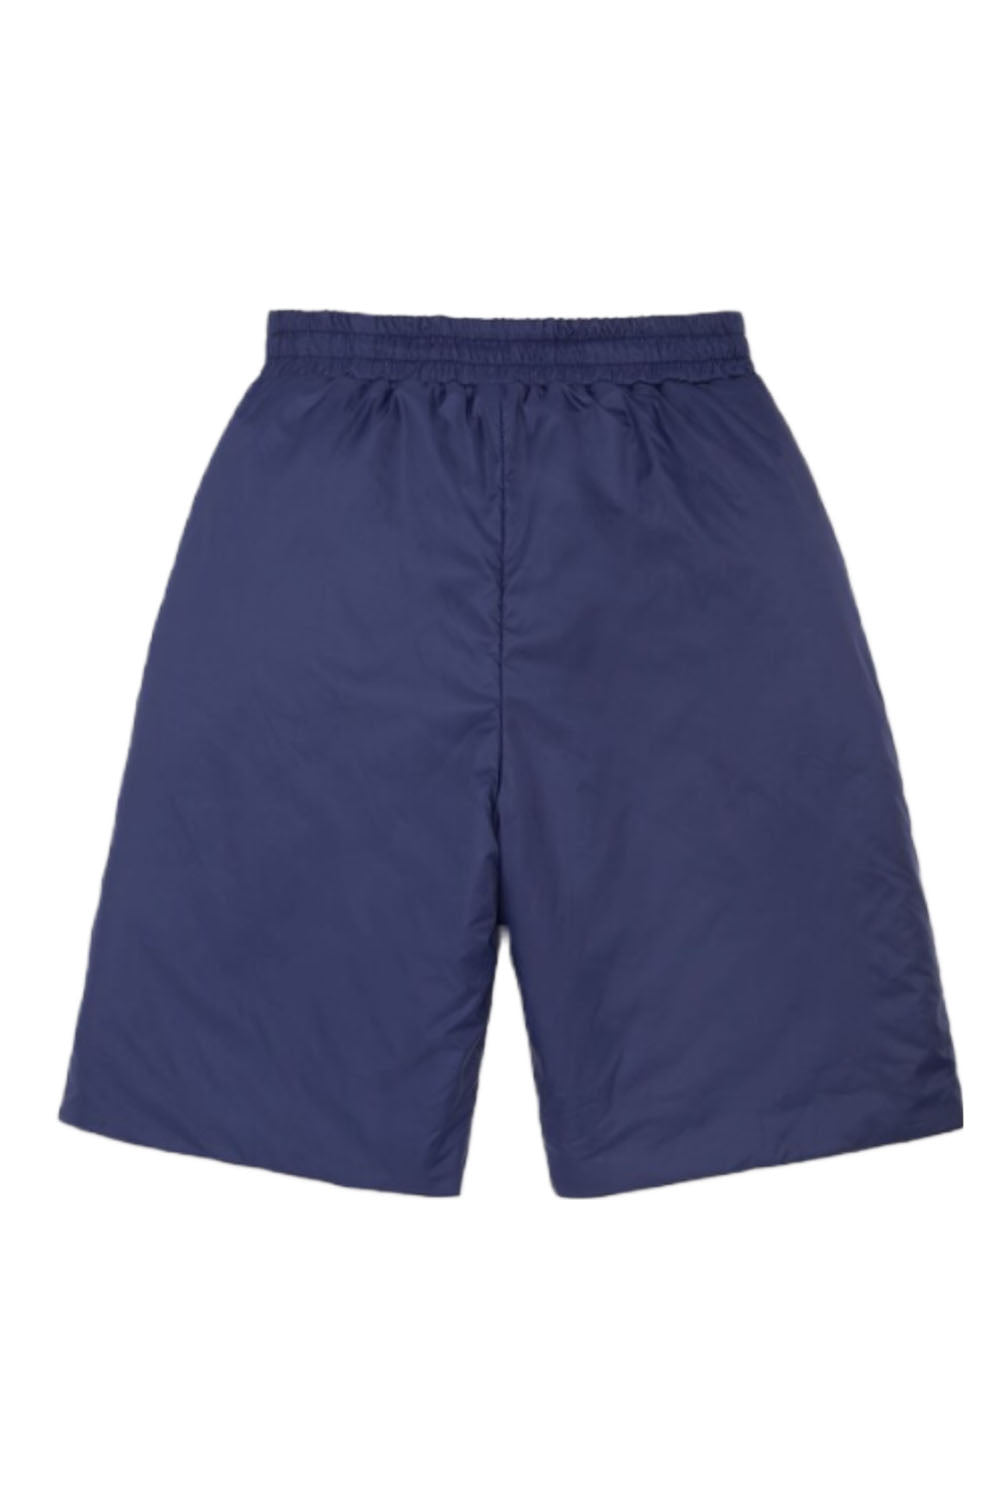 ​Bermuda Nylon Trousers for Boys - Maison7